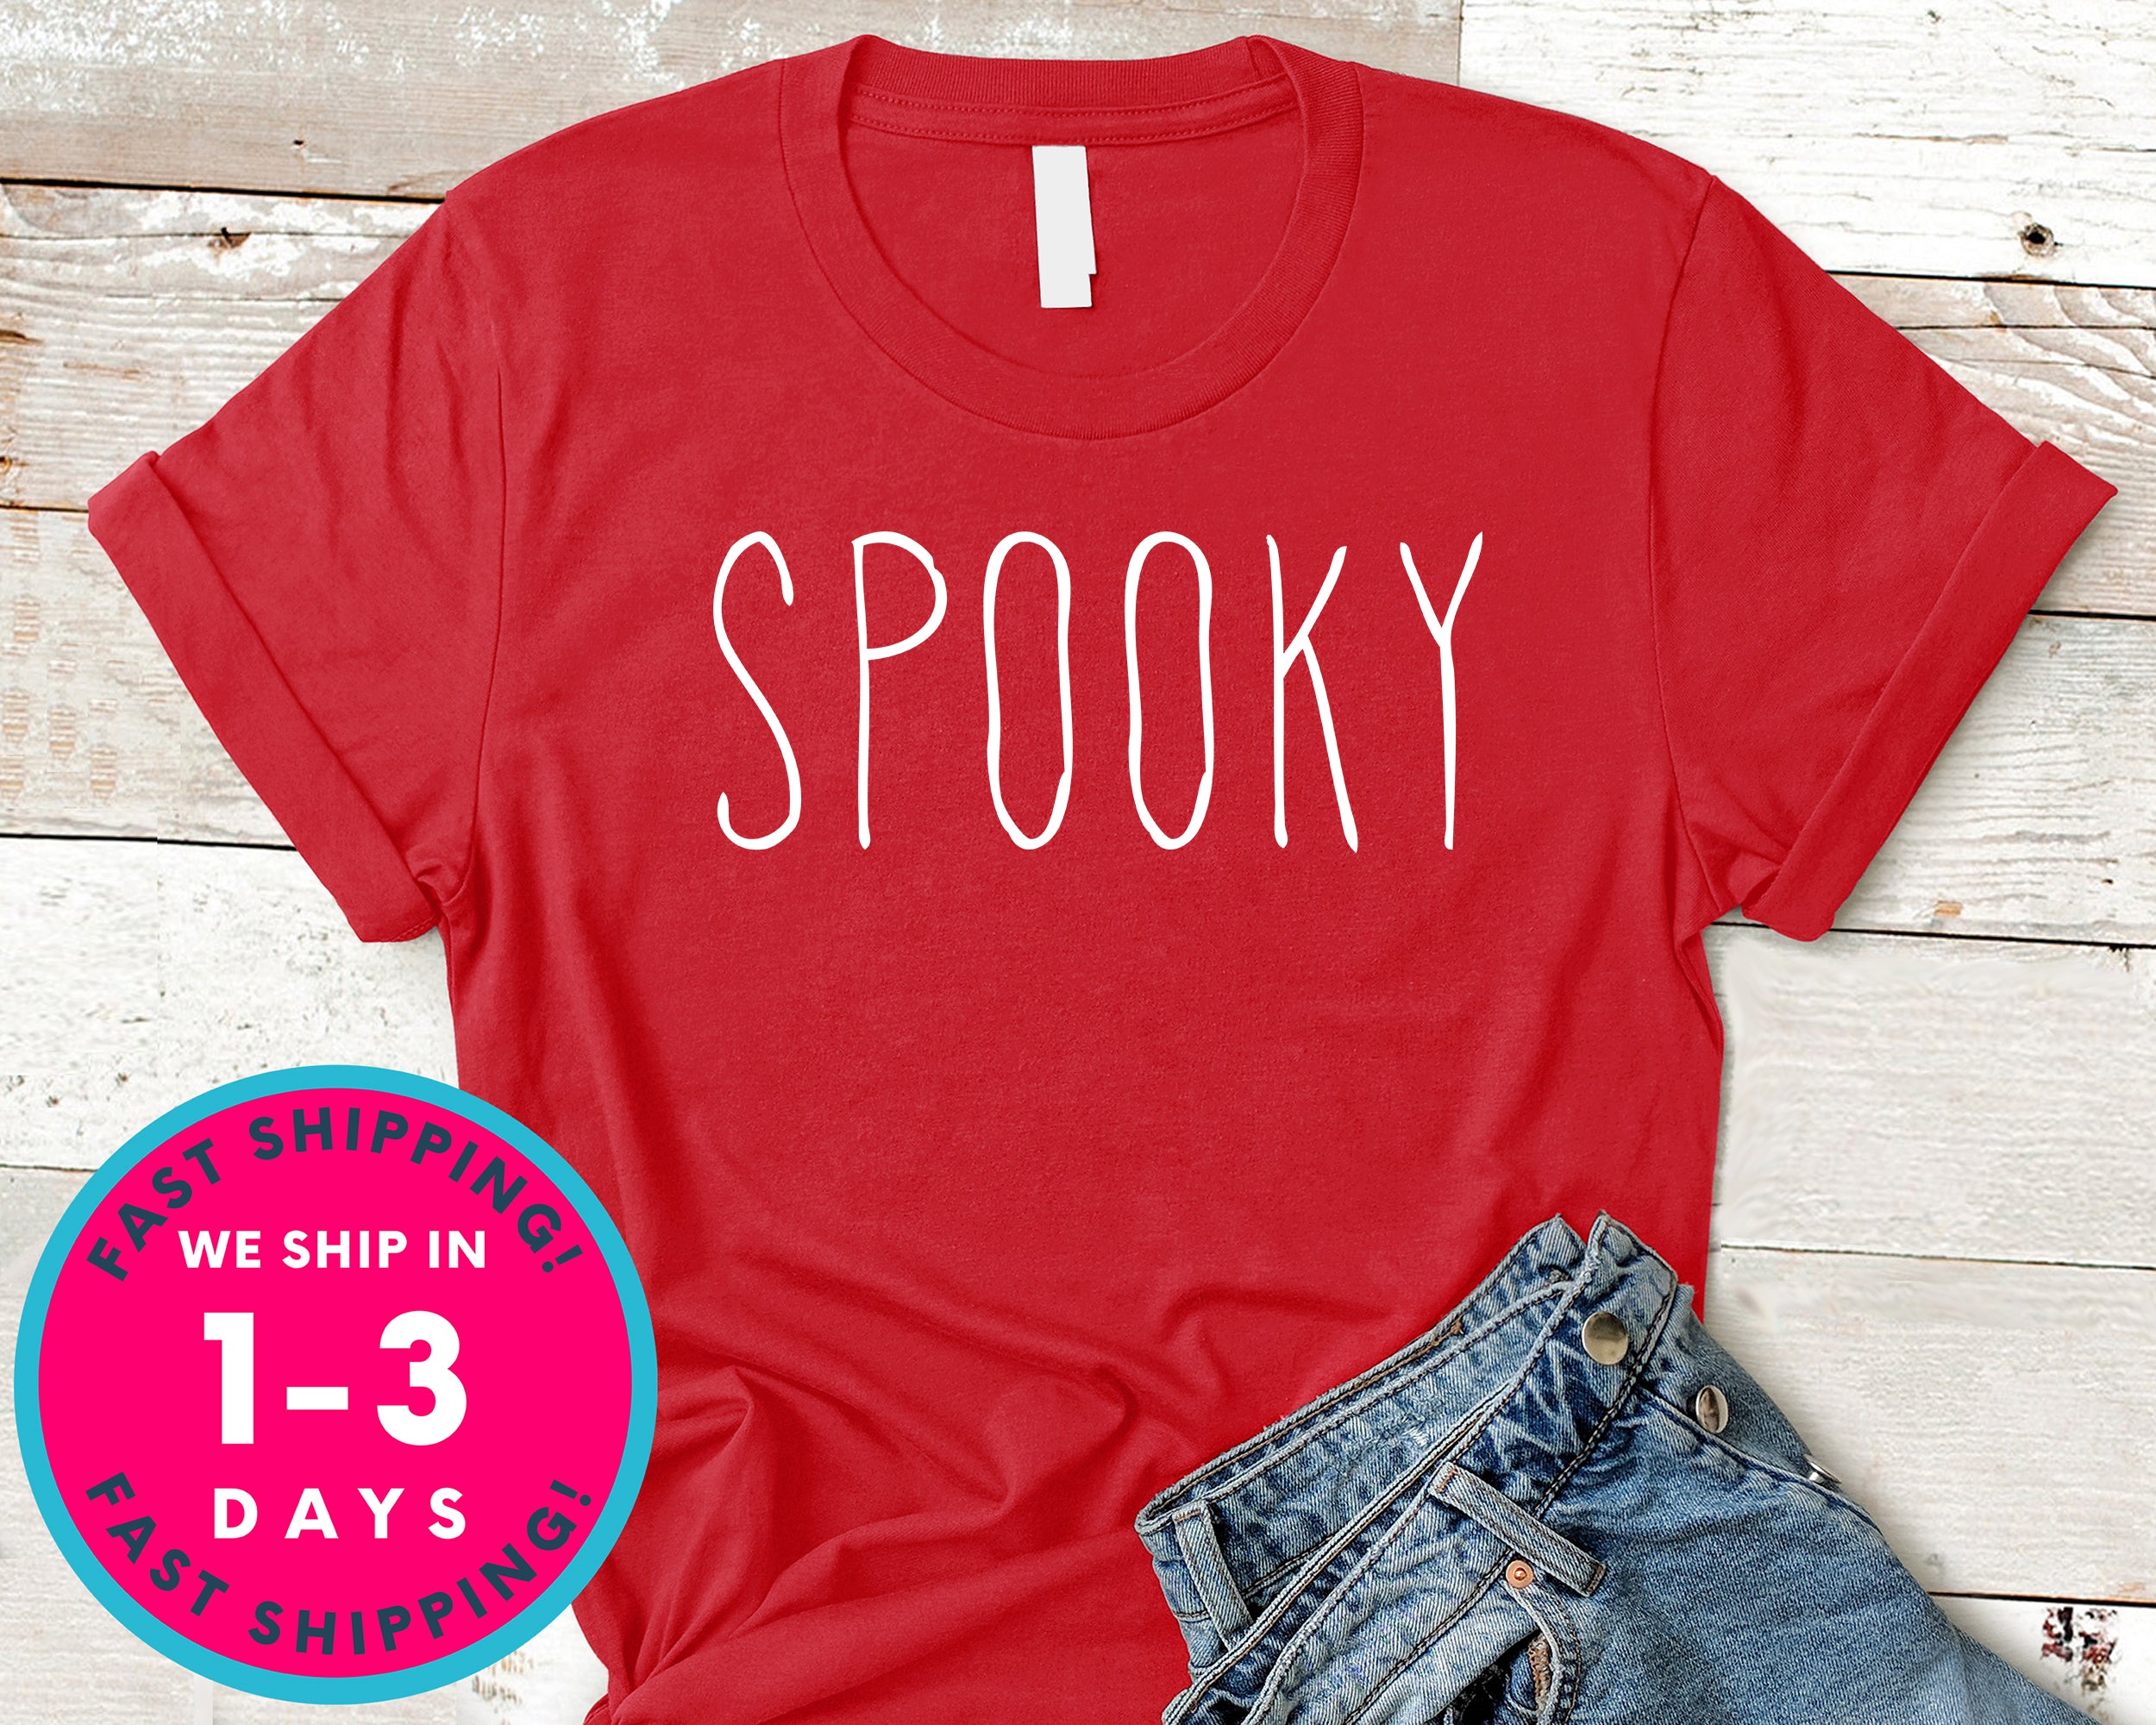 It's Spooky Season Halloween T-Shirt - Halloween Horror Scary Shirt